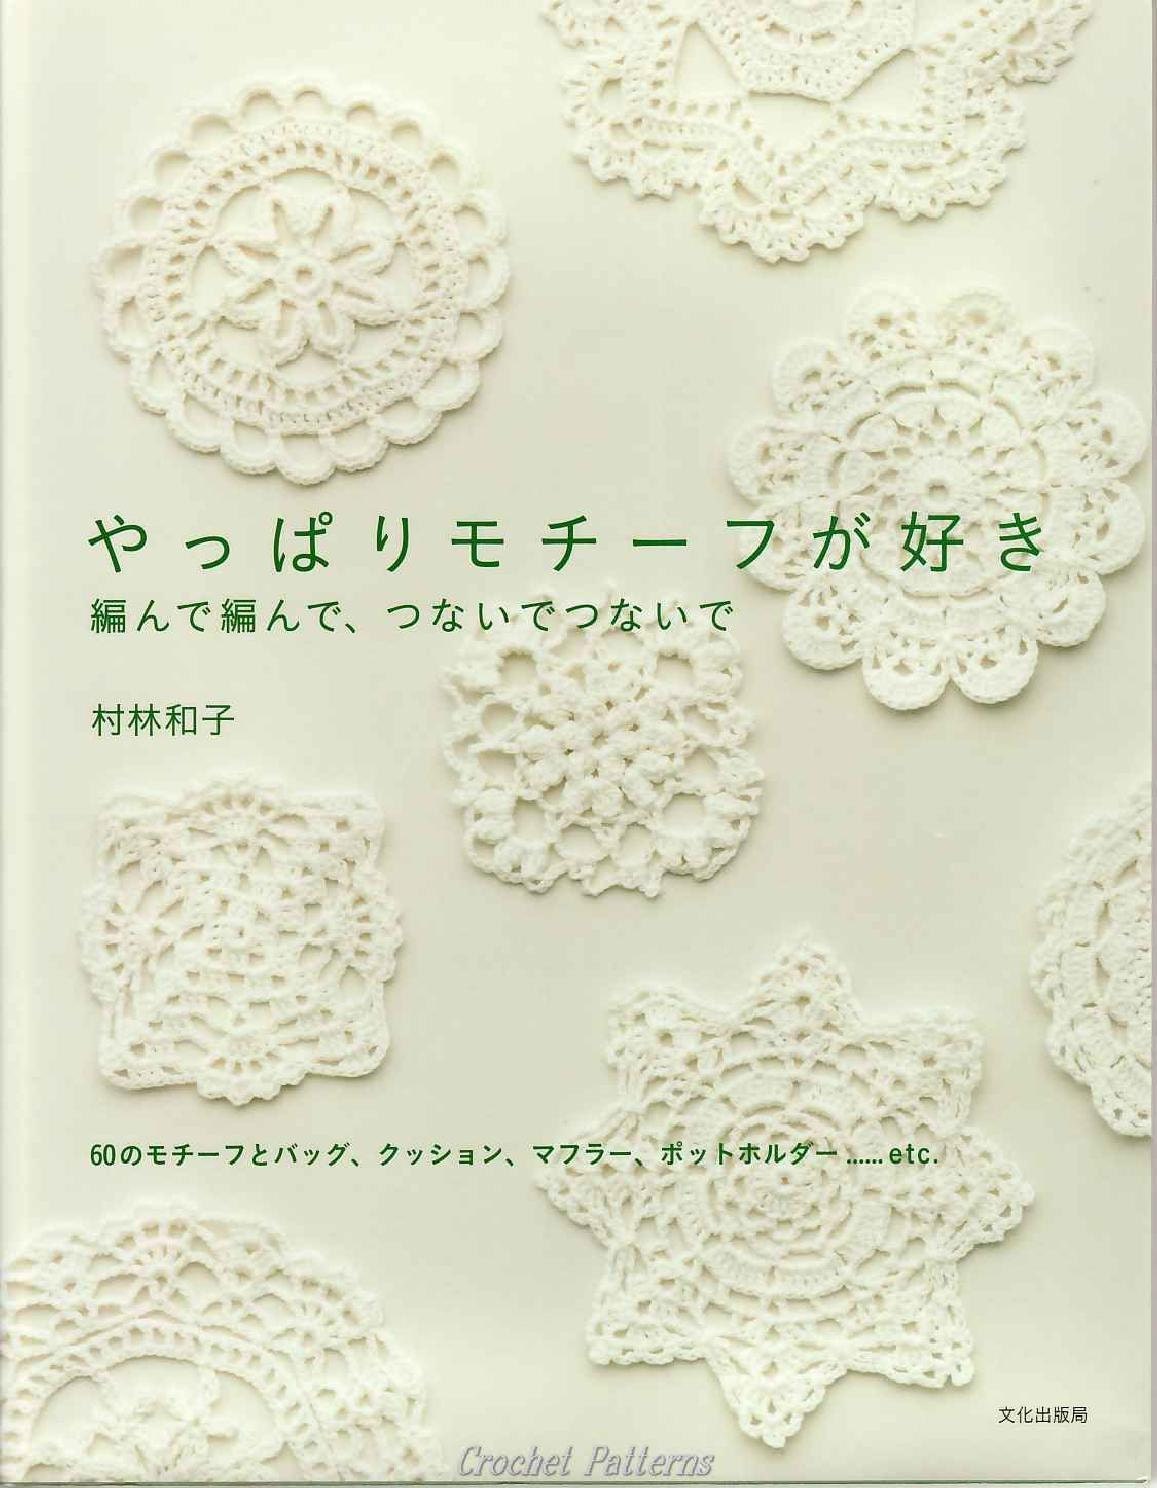 Organic Crochet Motifs - Japanese eBook Pattern - Instant ...